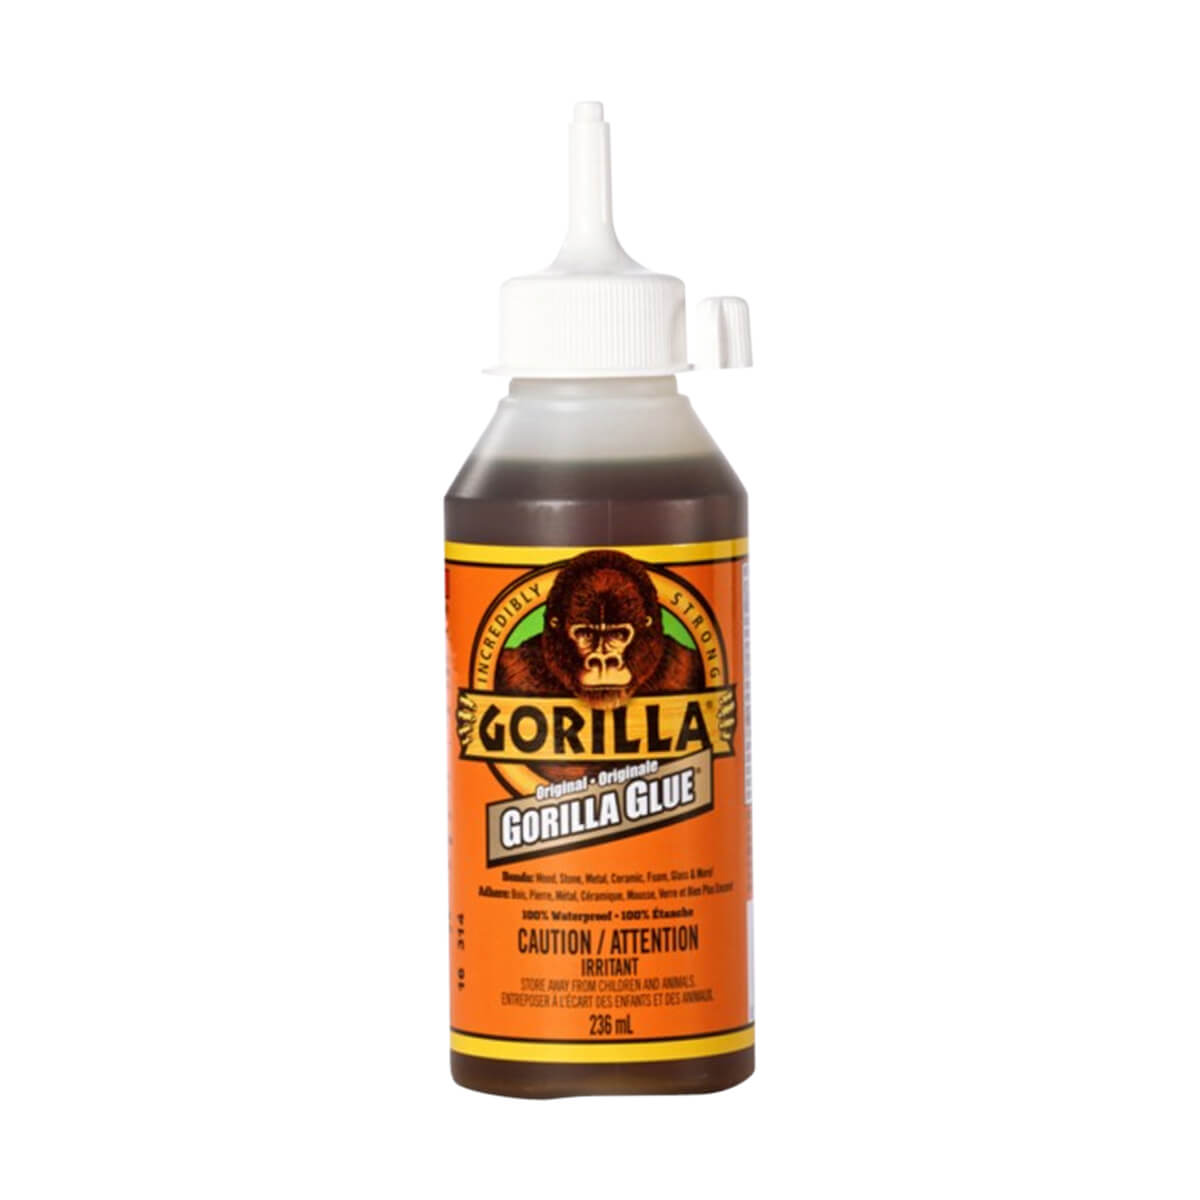 8 oz Gorilla Glue - 236 ml